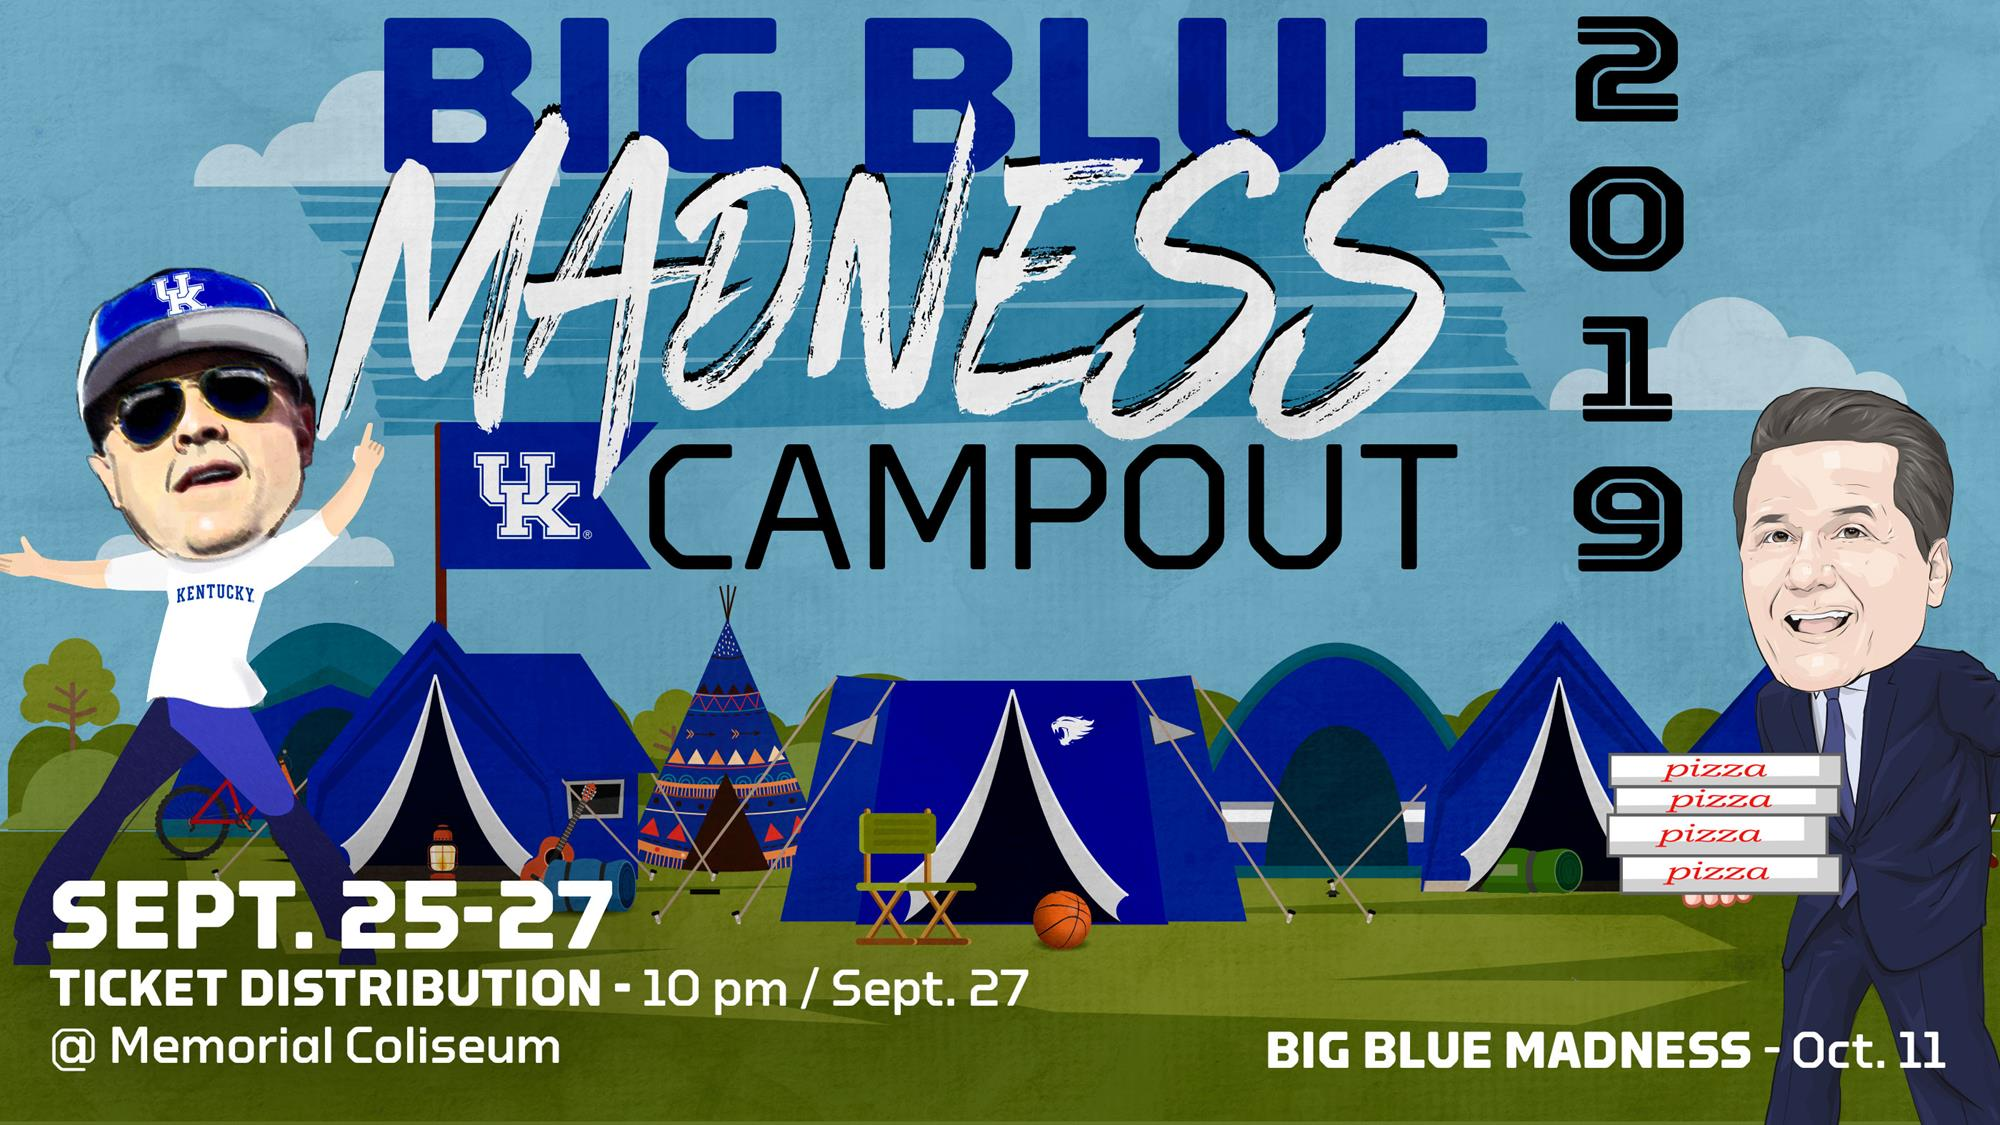 Big Blue Madness Ticket Distribution Slated for Sept. 27